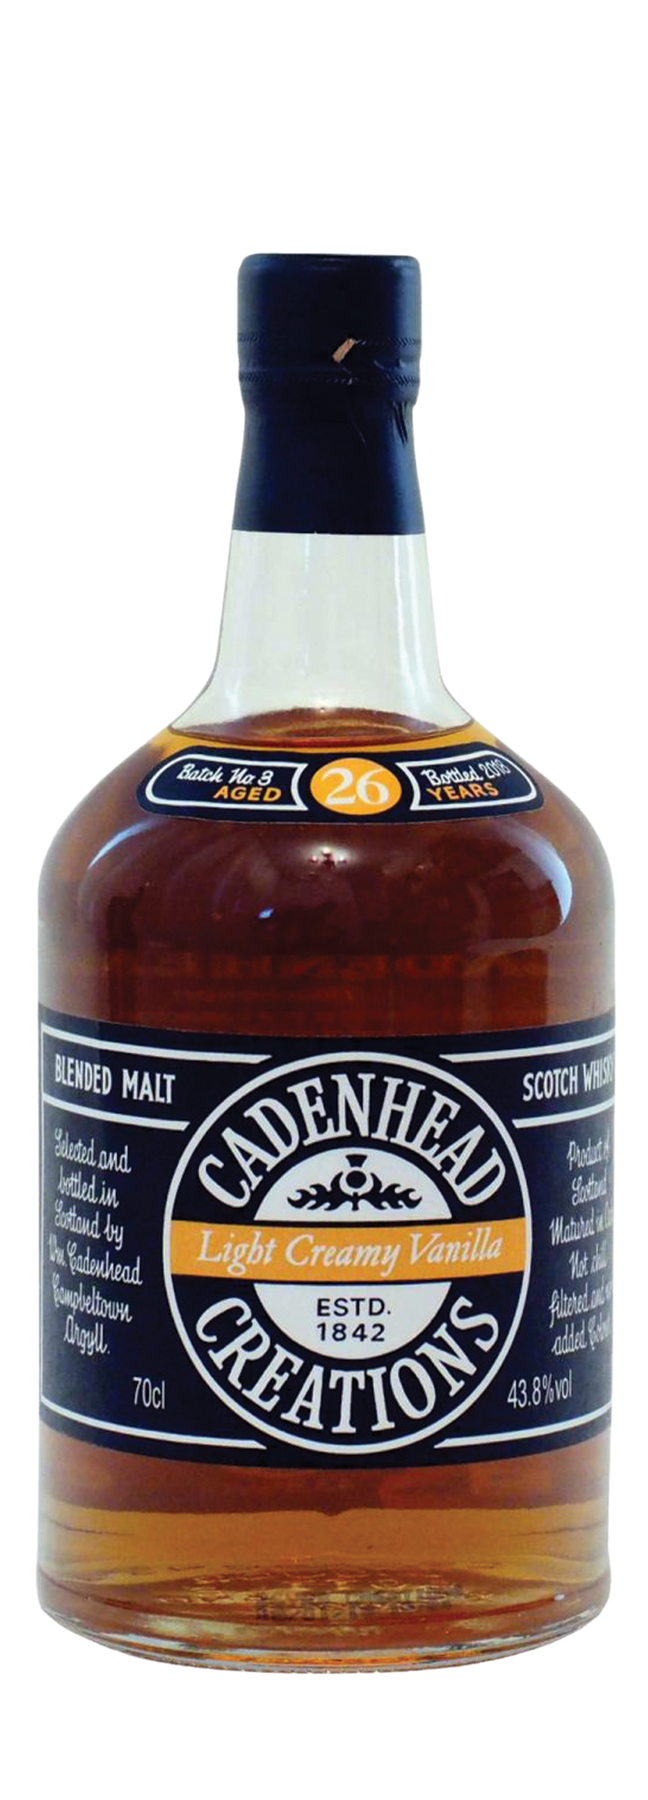 Cadenhead's 26 Years Old Creations Light Creamy Vanilla 43,8% 70cl